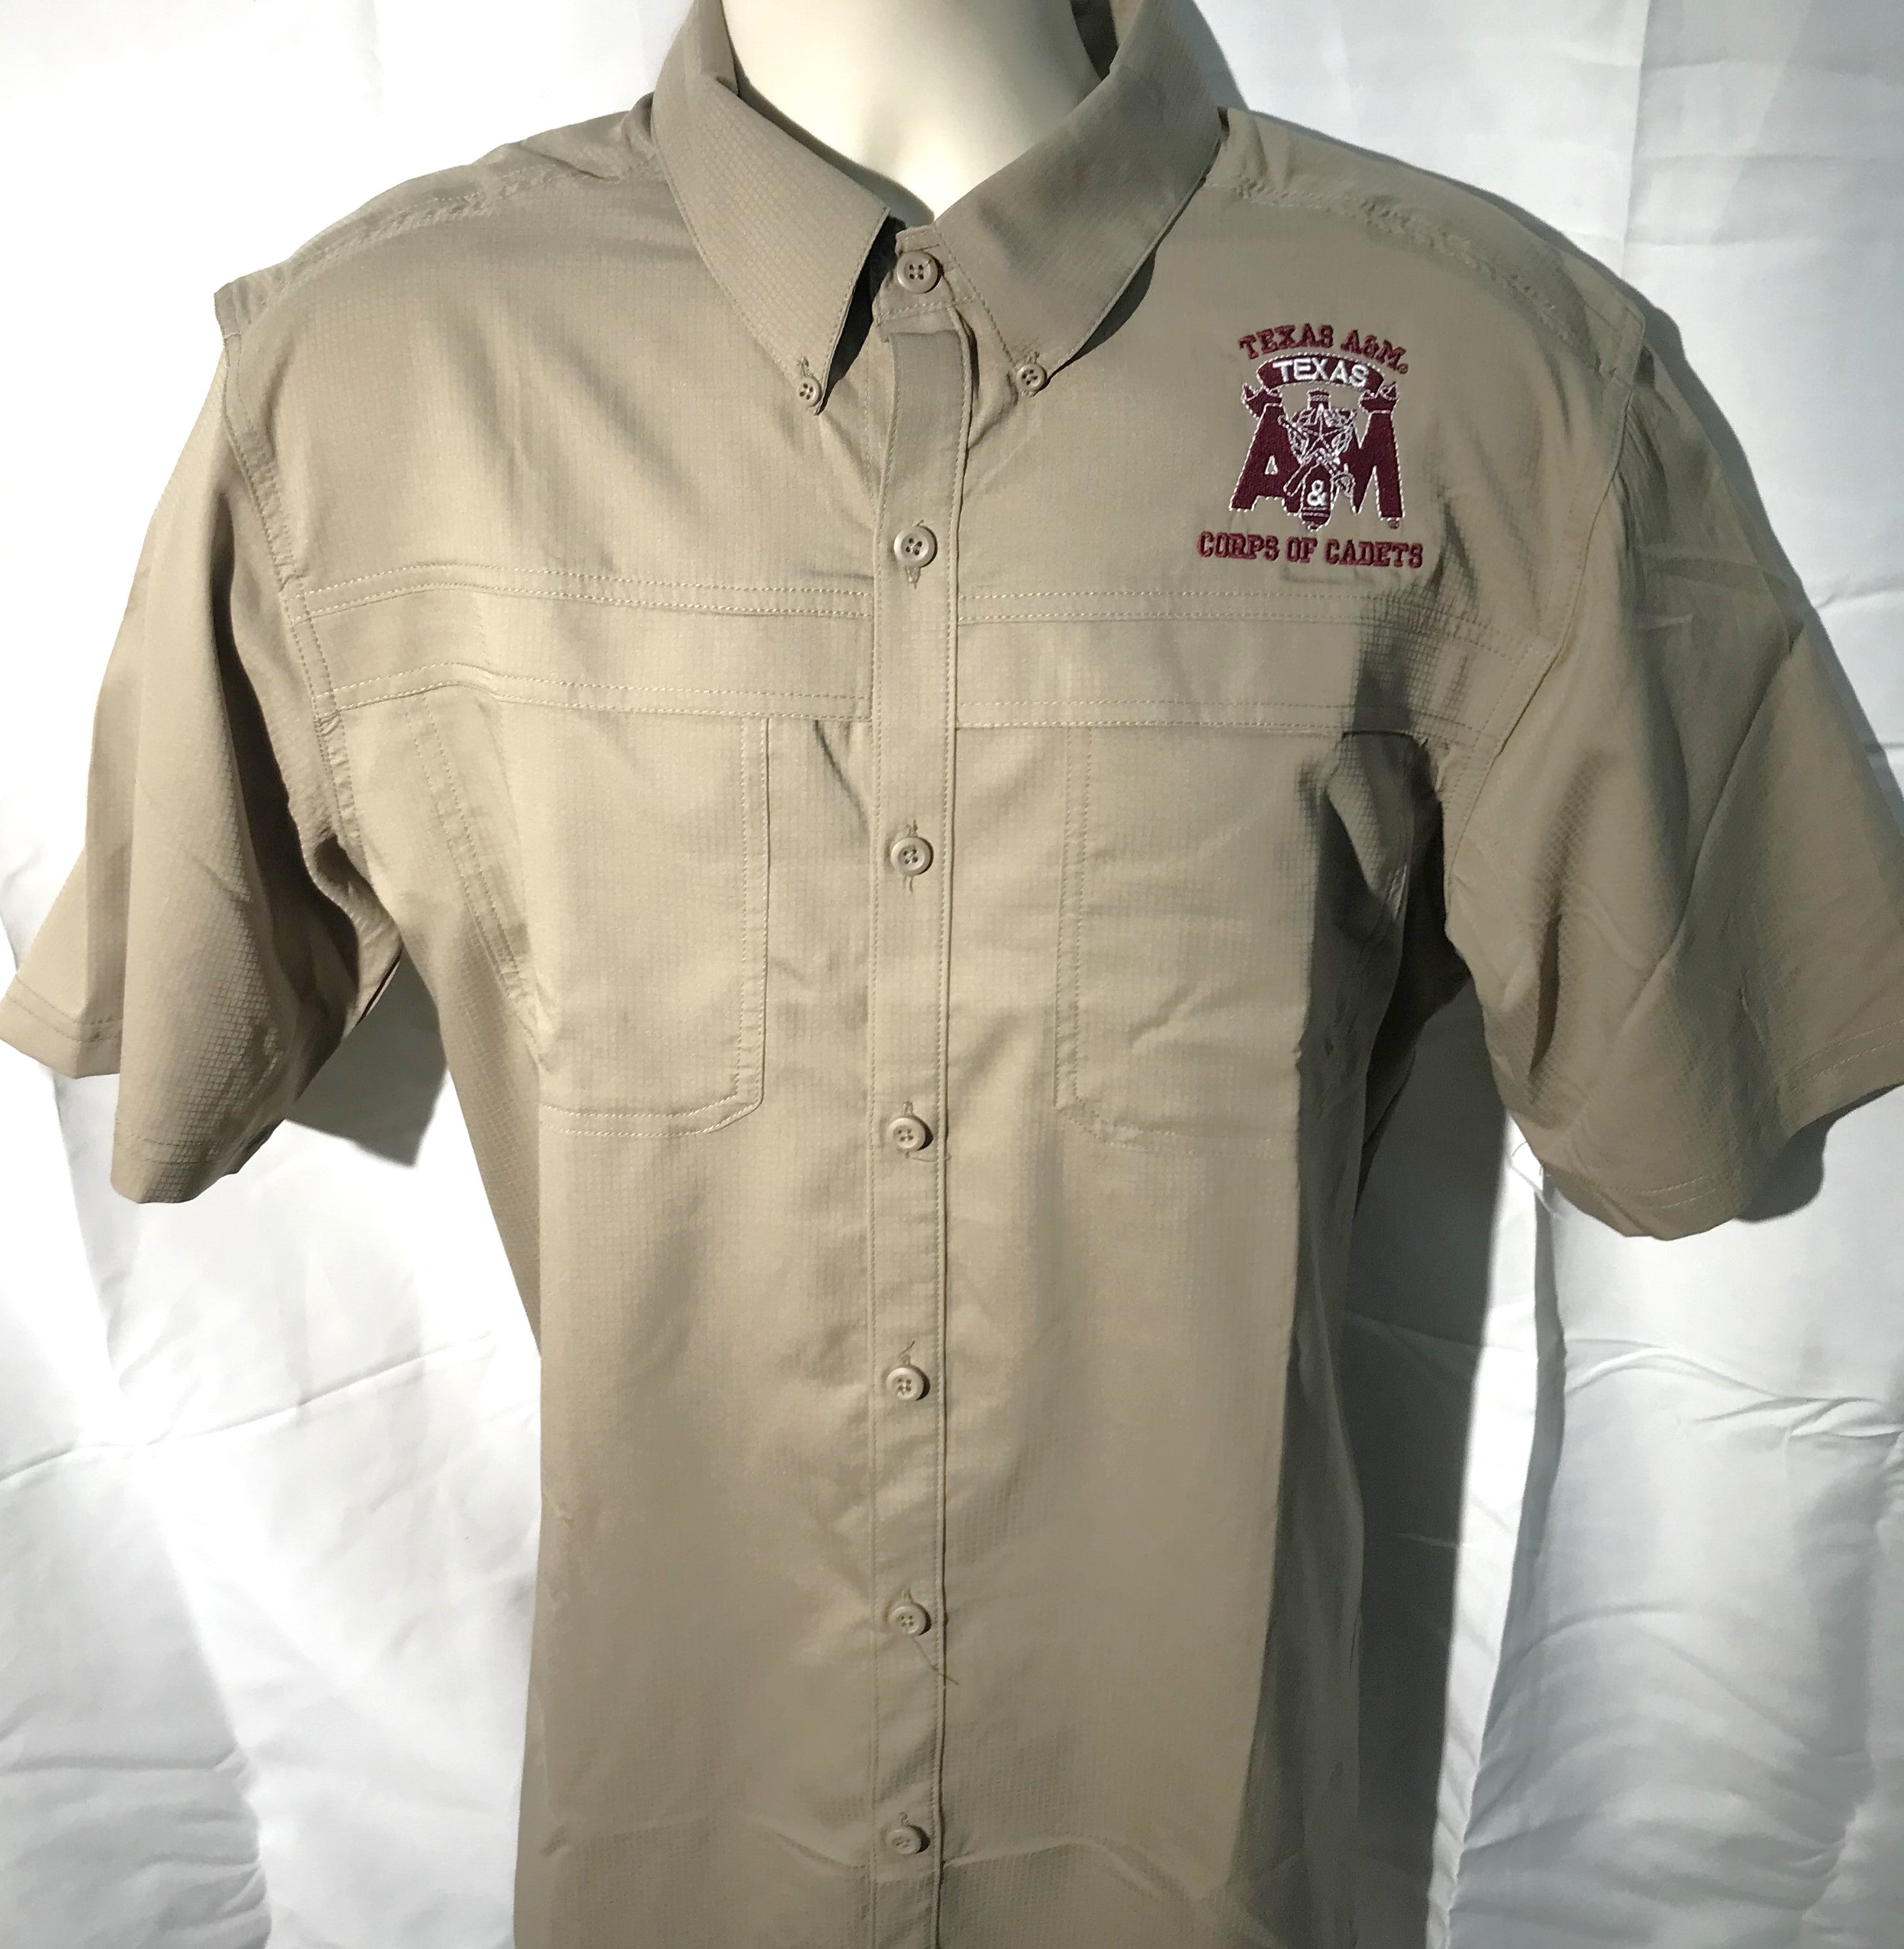  Columbia Fishing Shirts For Men Short Sleeve